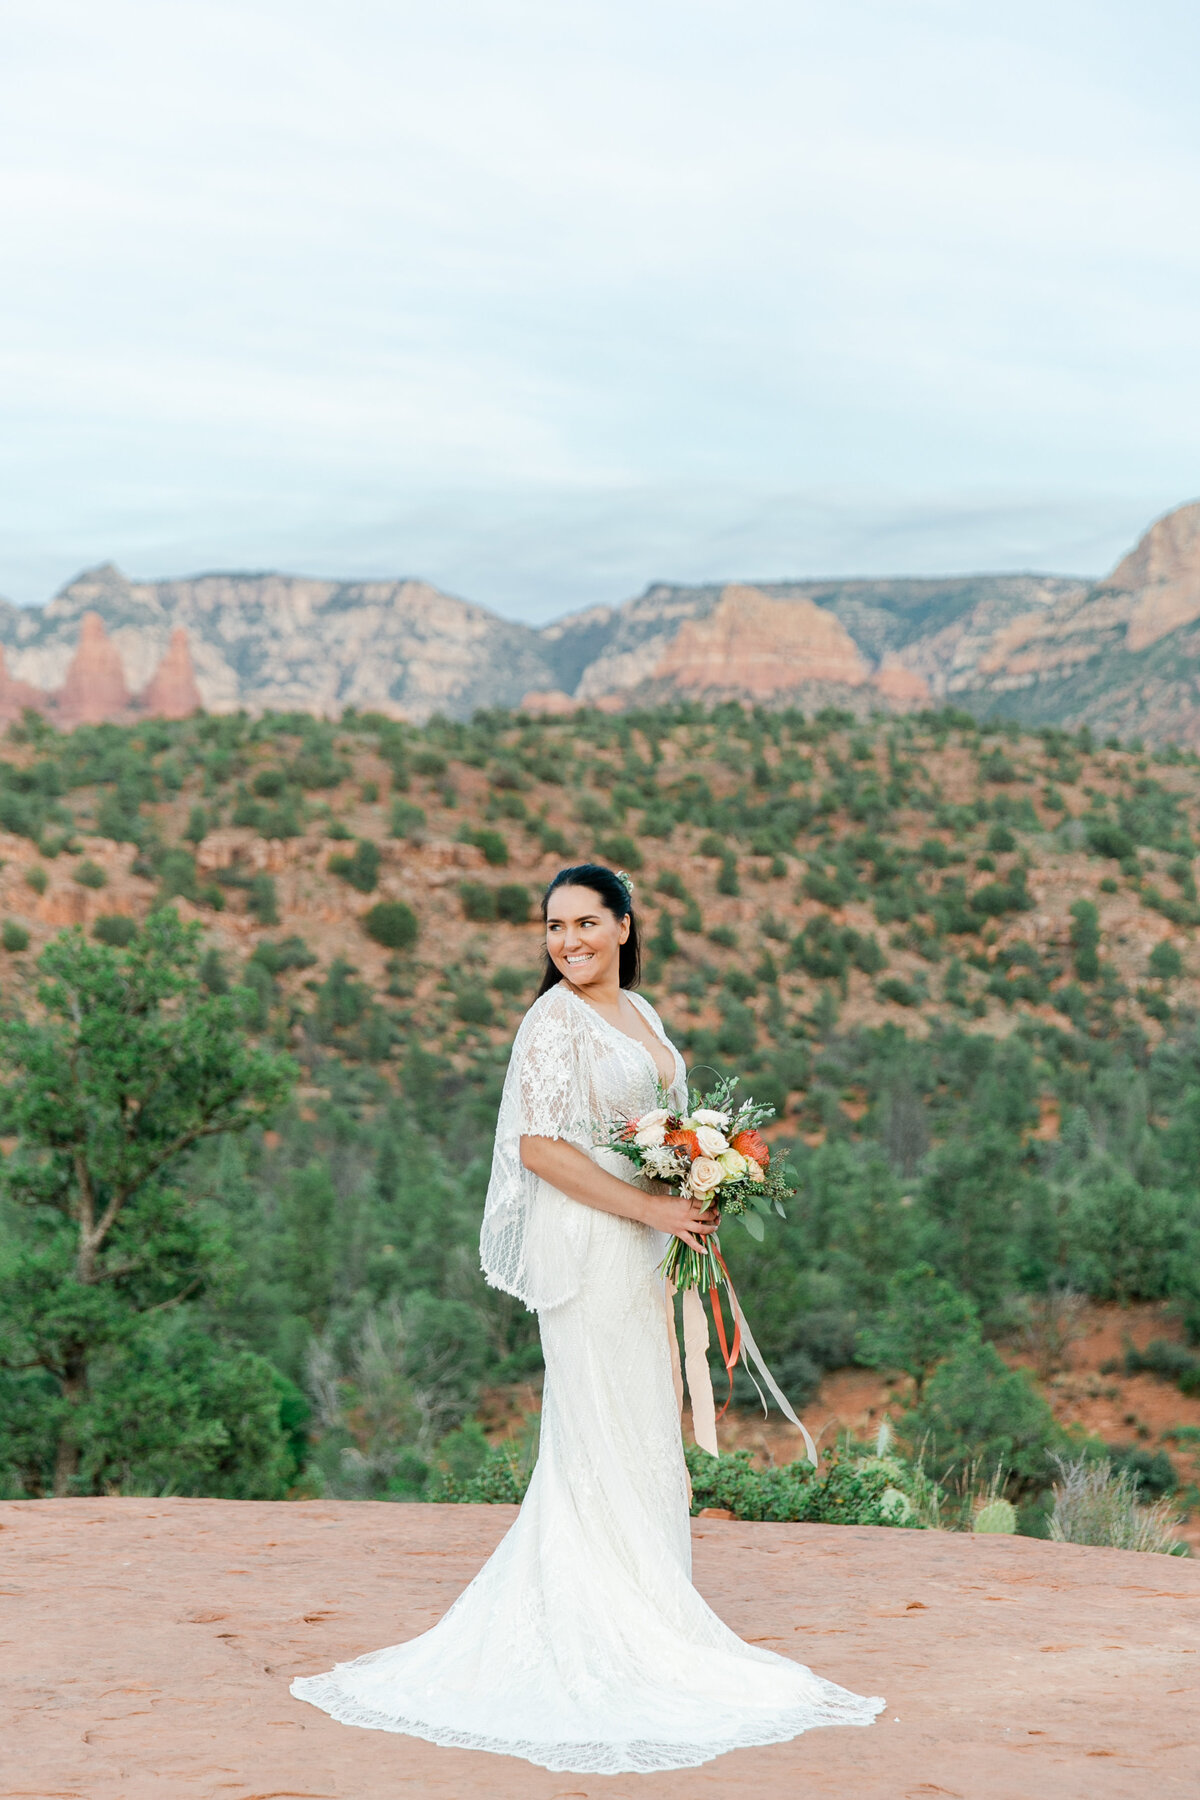 Karlie Colleen Photography - Sedona Arizona Elopement Wedding - Sara & Alfredo-277